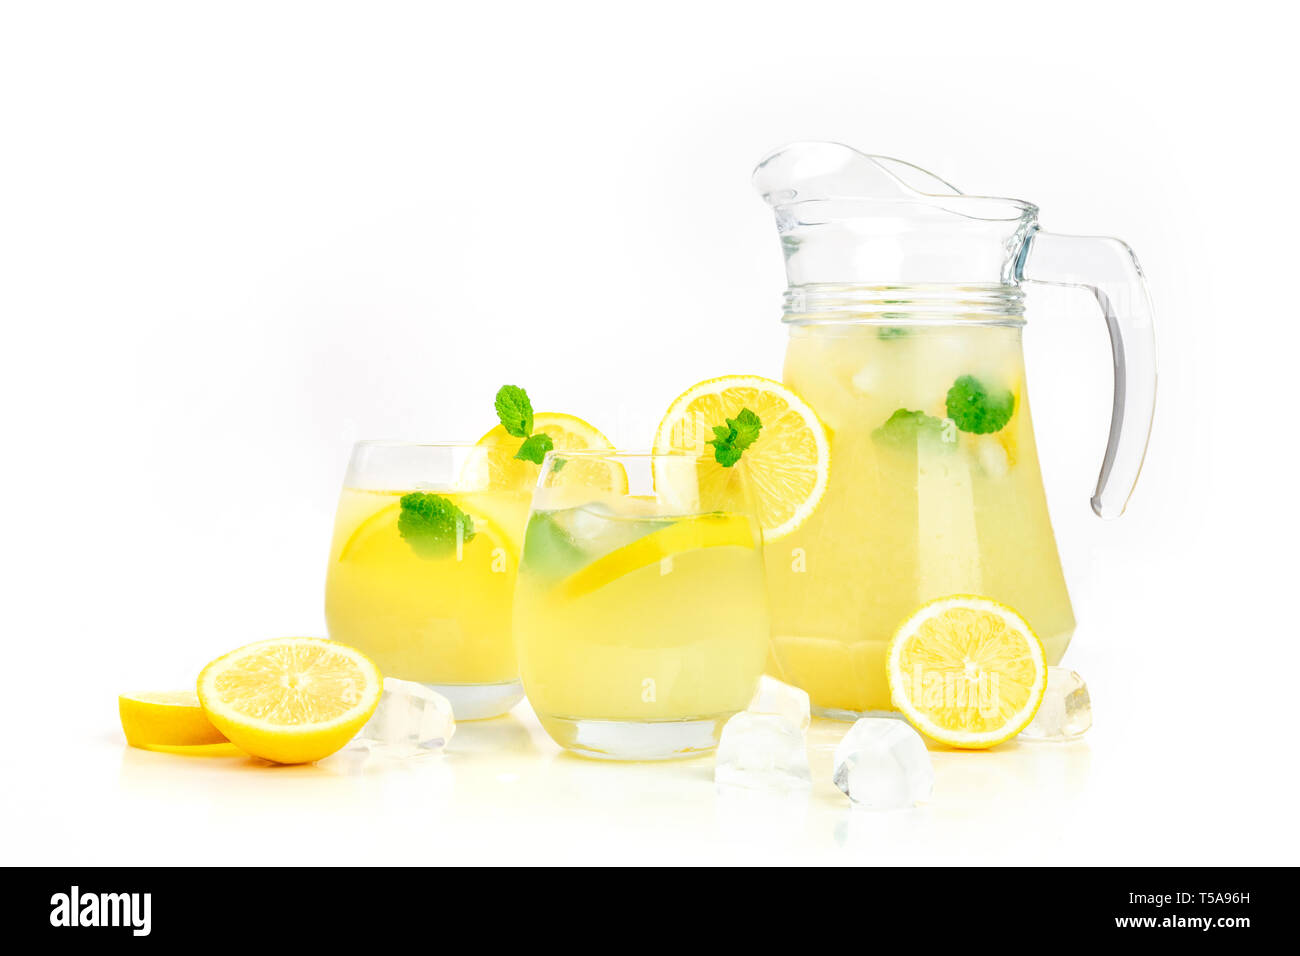 Lemonade pitcher with lemons Stock Photo by ©maxsol7 43096301